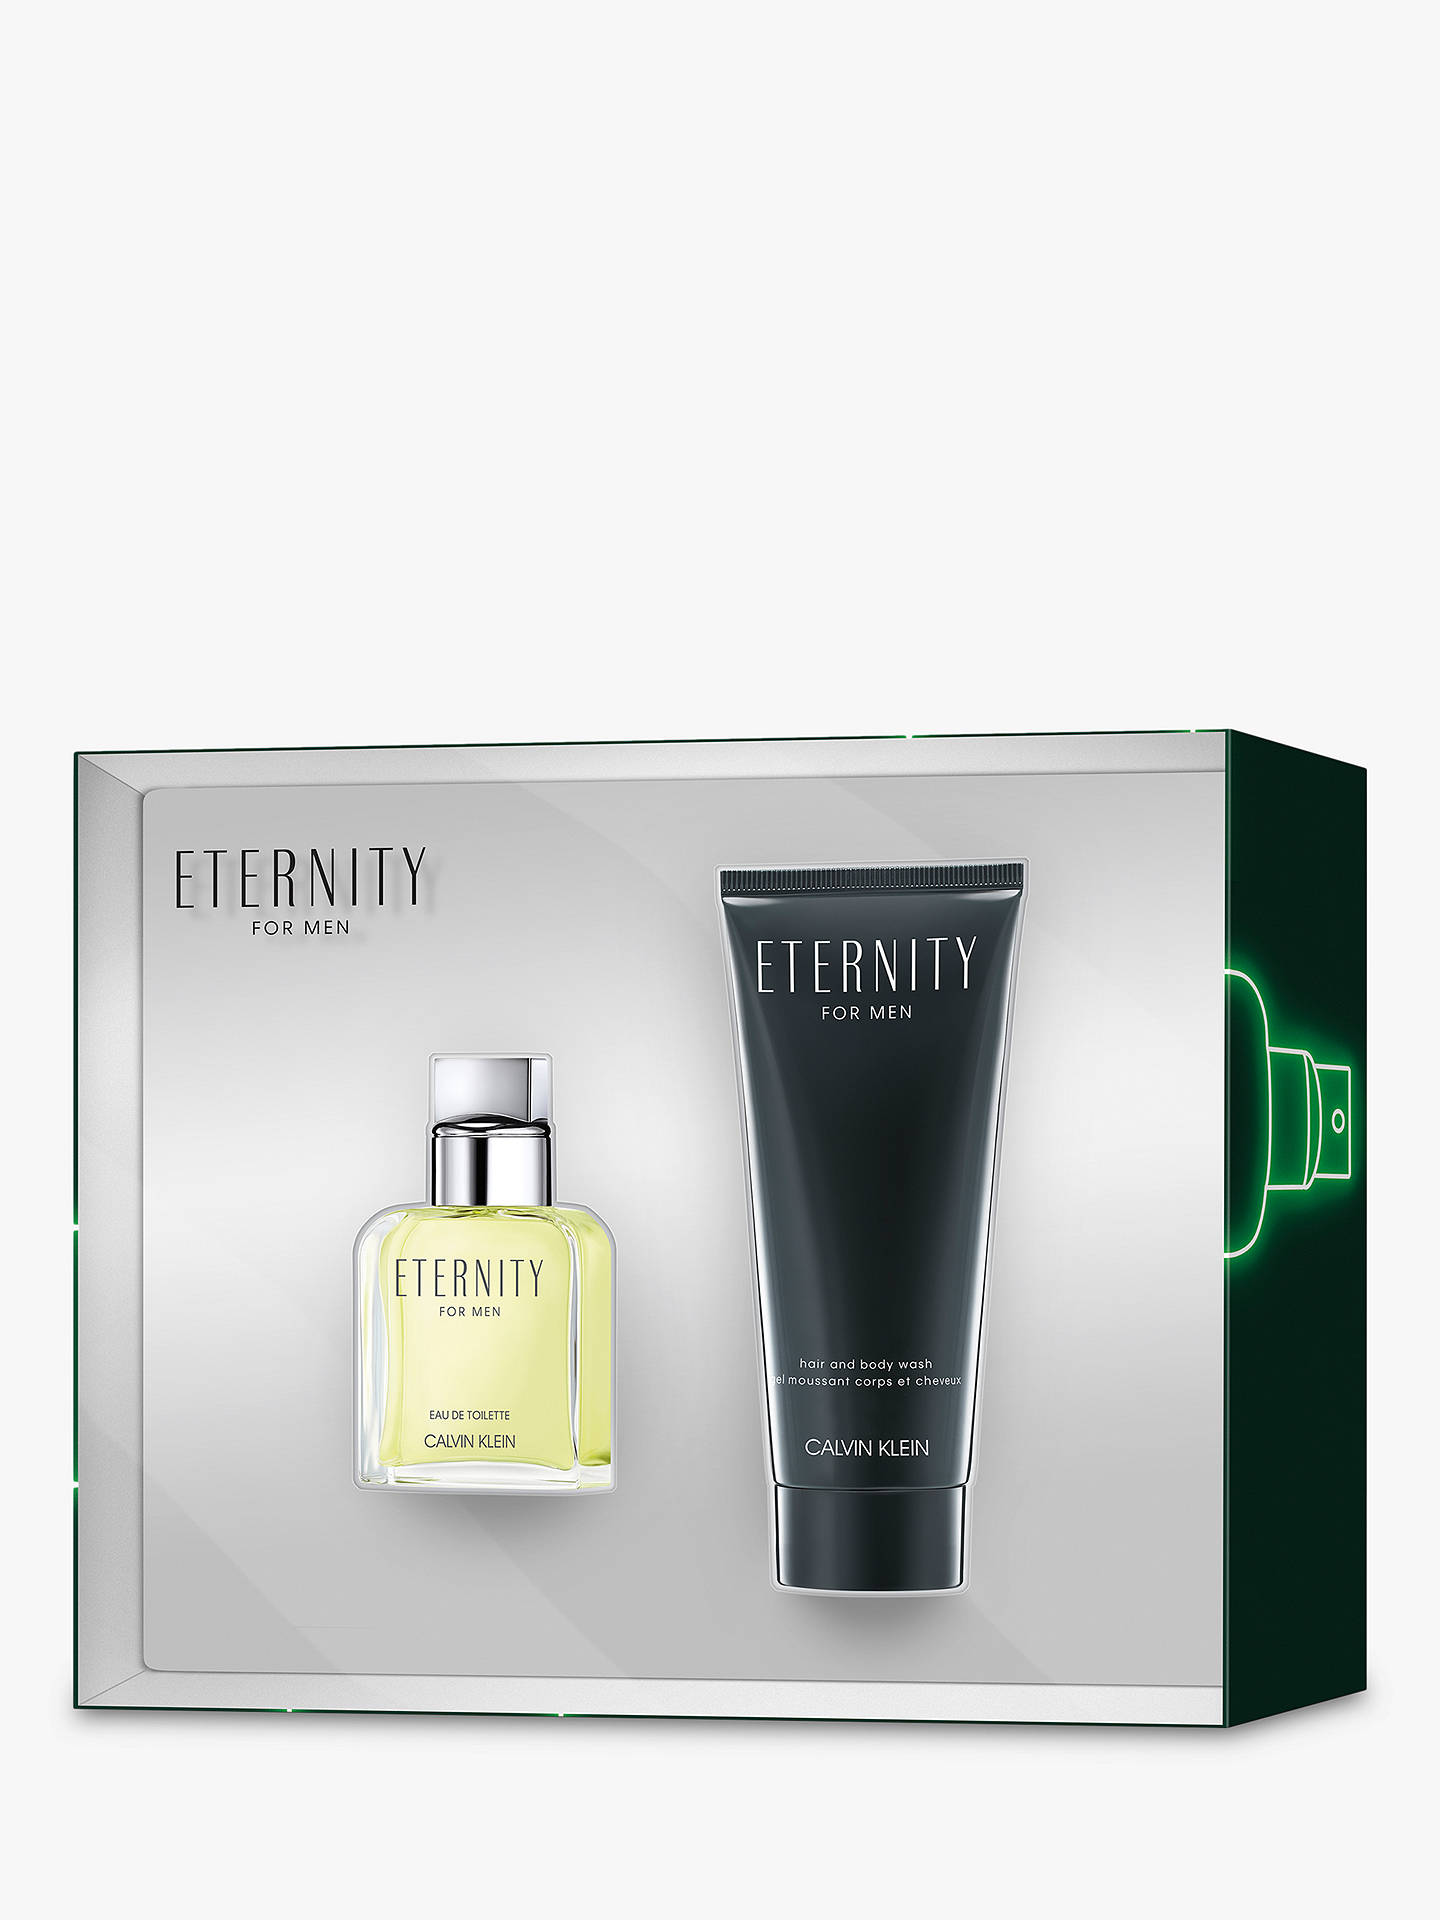 Calvin Klein Eternity For Men Eau de Toilette 30ml Fragrance Gift Set